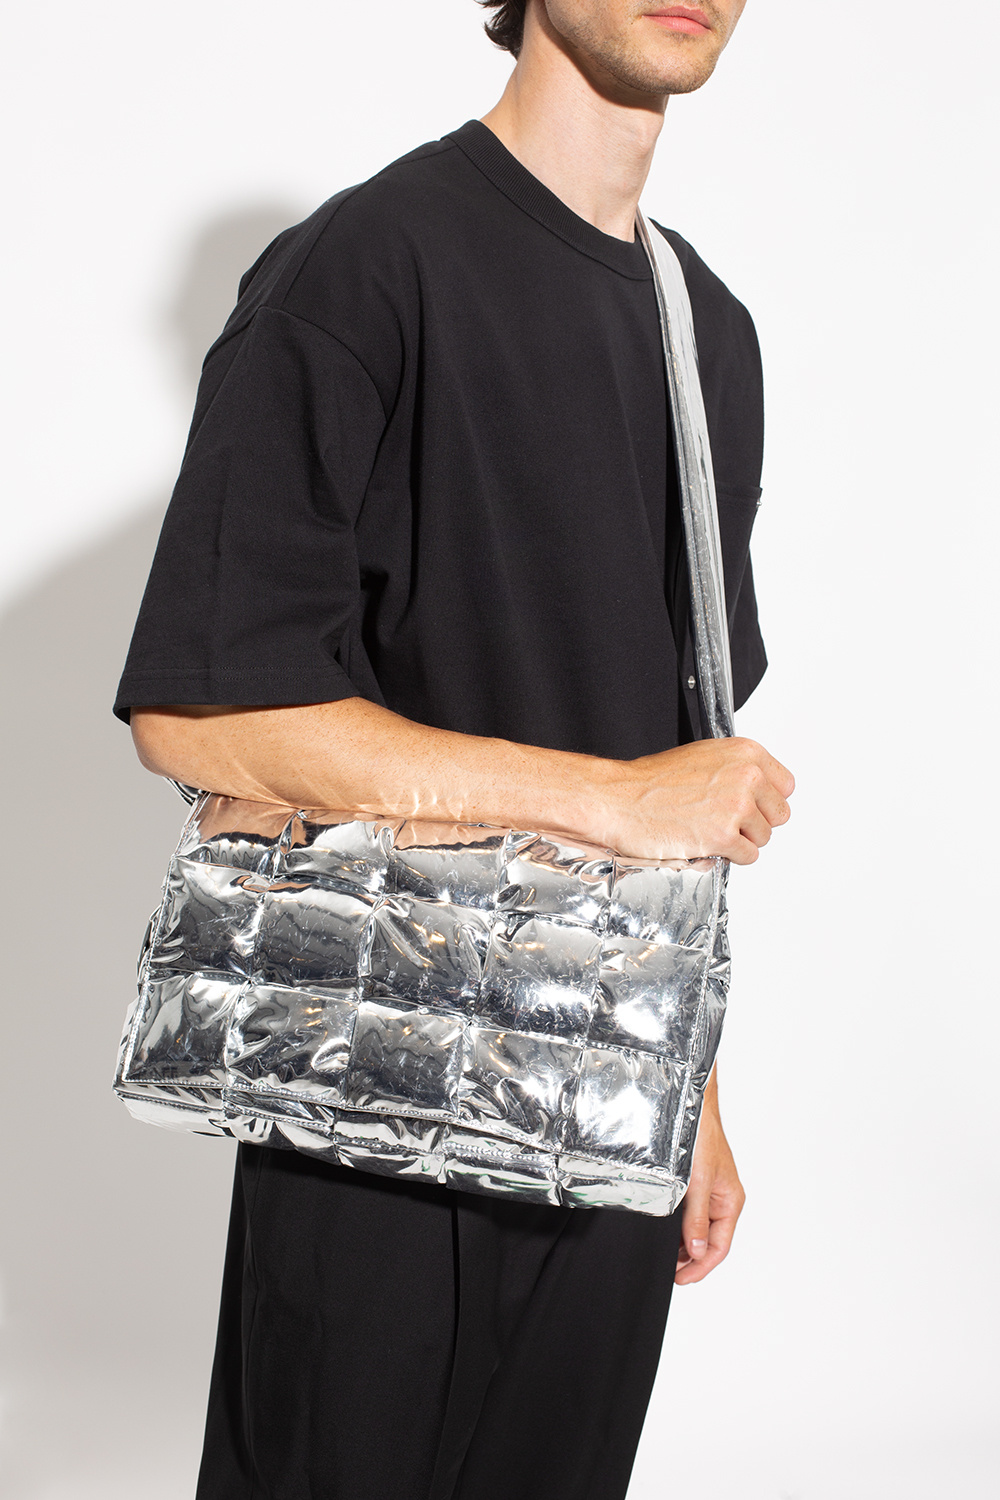 Bottega Veneta ‘Cassette Large’ shoulder bag